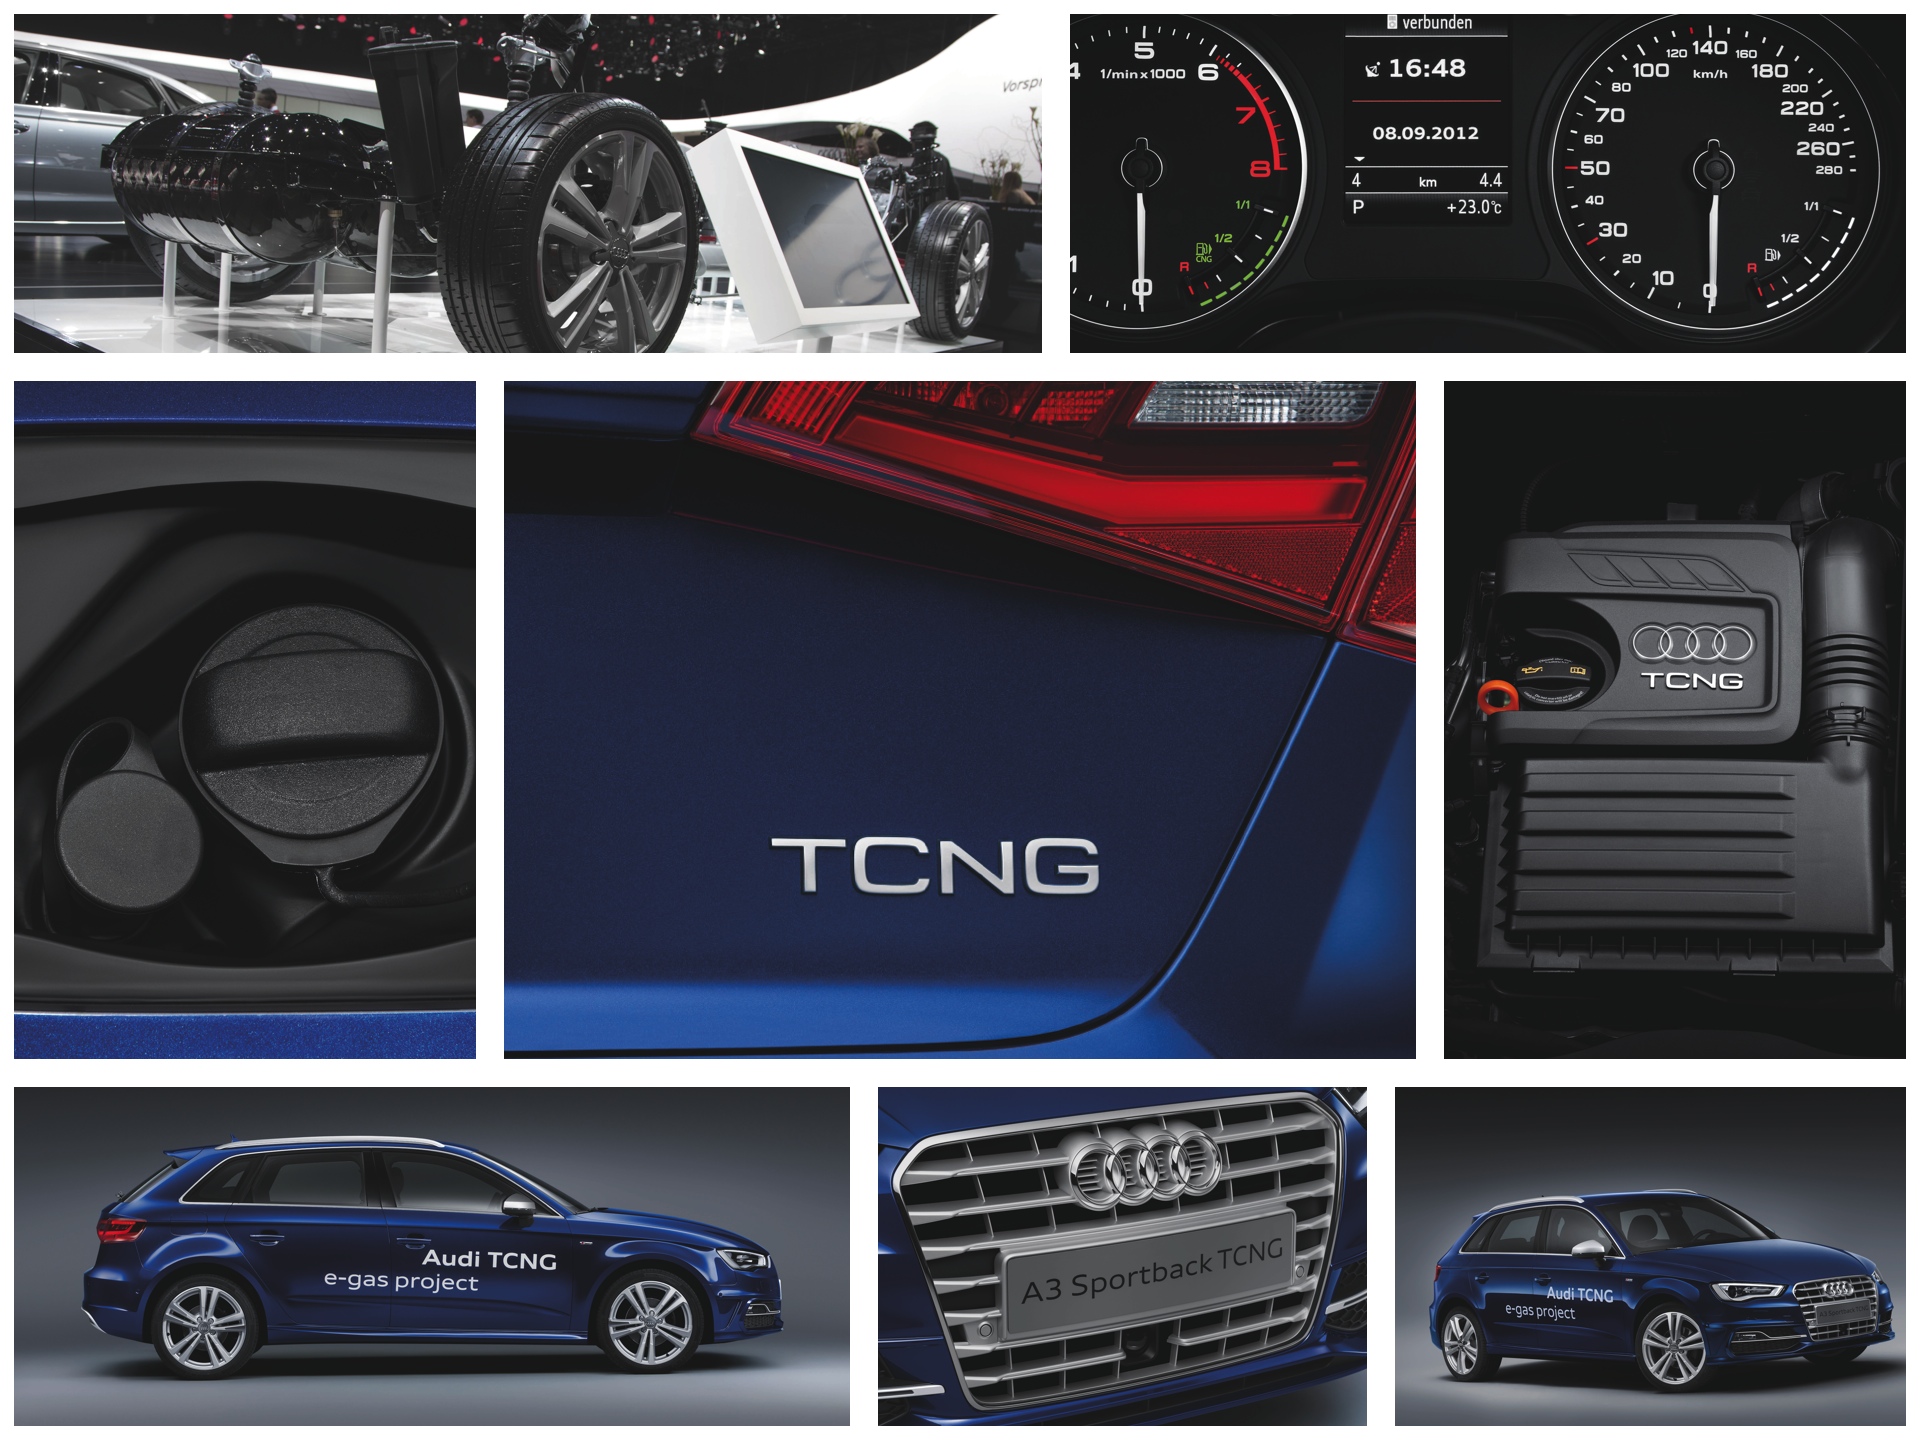 Audi A3 Sportback TCNG e-gas